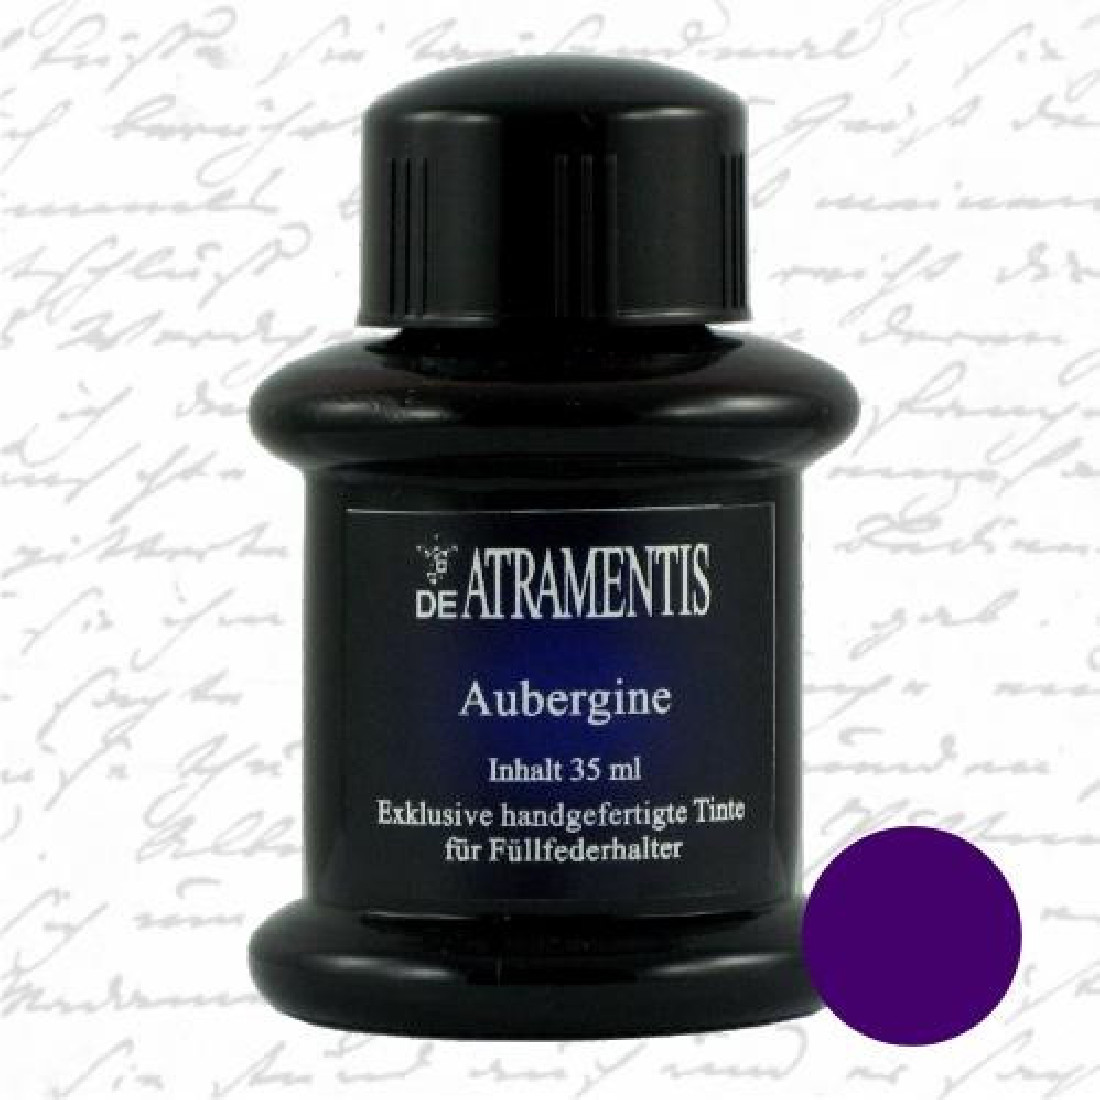 De Atramentis Aubergine 45ml fountain pen standard ink